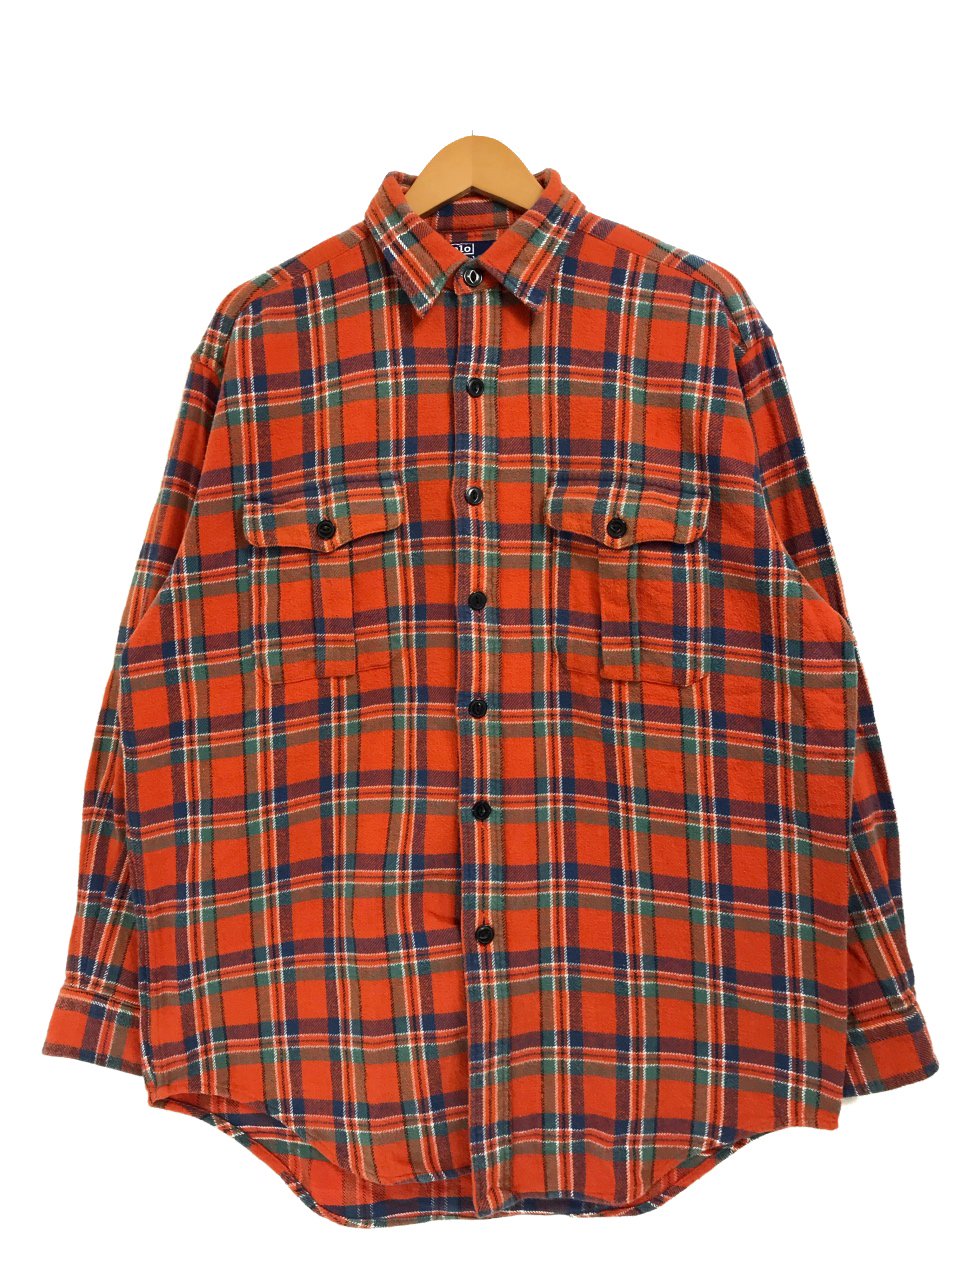 Polo Ralph Lauren Check Flannel L/S Shirt オレンジ M ポロラルフ